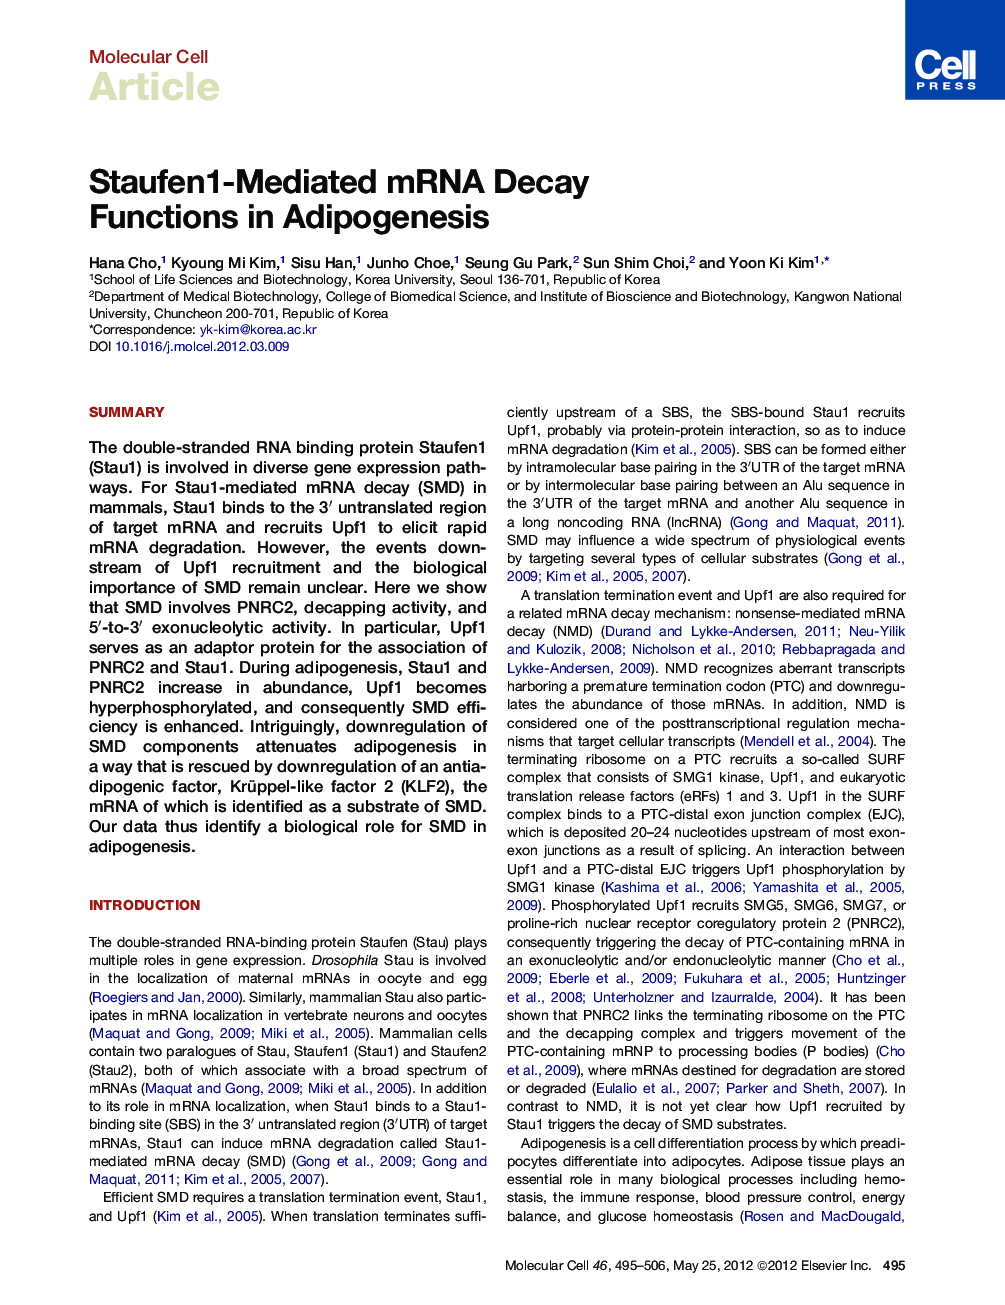 Staufen1-Mediated mRNA Decay Functions in Adipogenesis